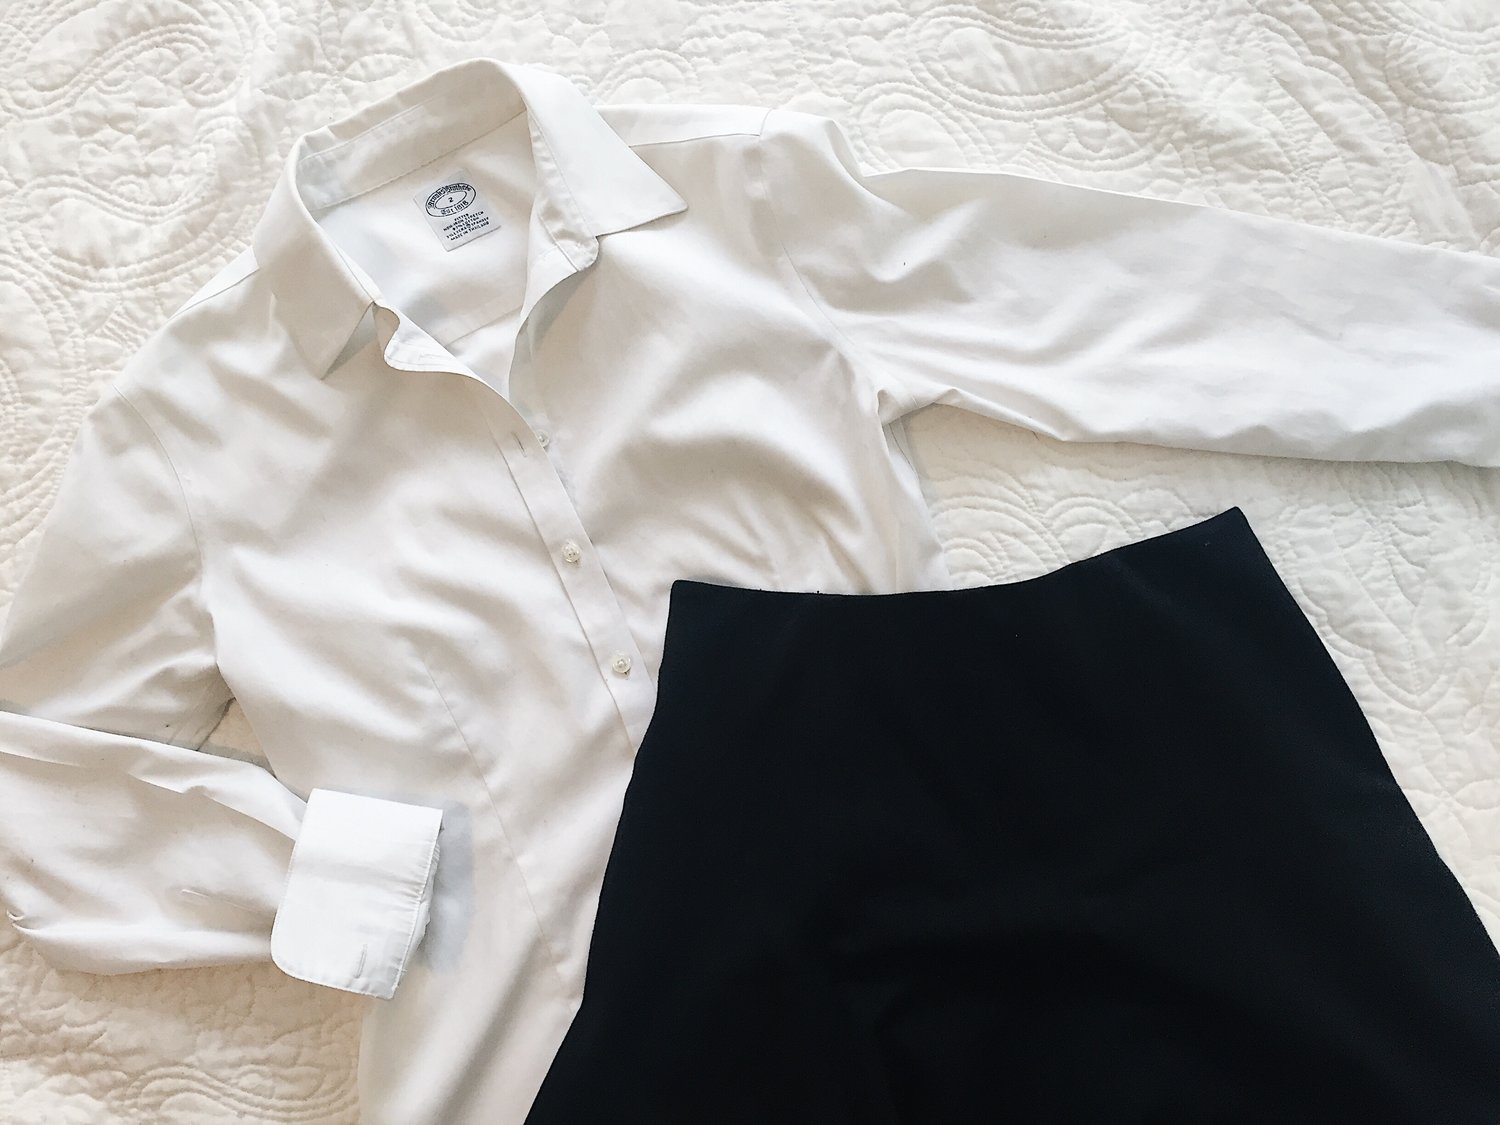 UNIFORM DRESSING | White Shirt + Black Skirt - ABOUT UNIFORM DRESSING ...